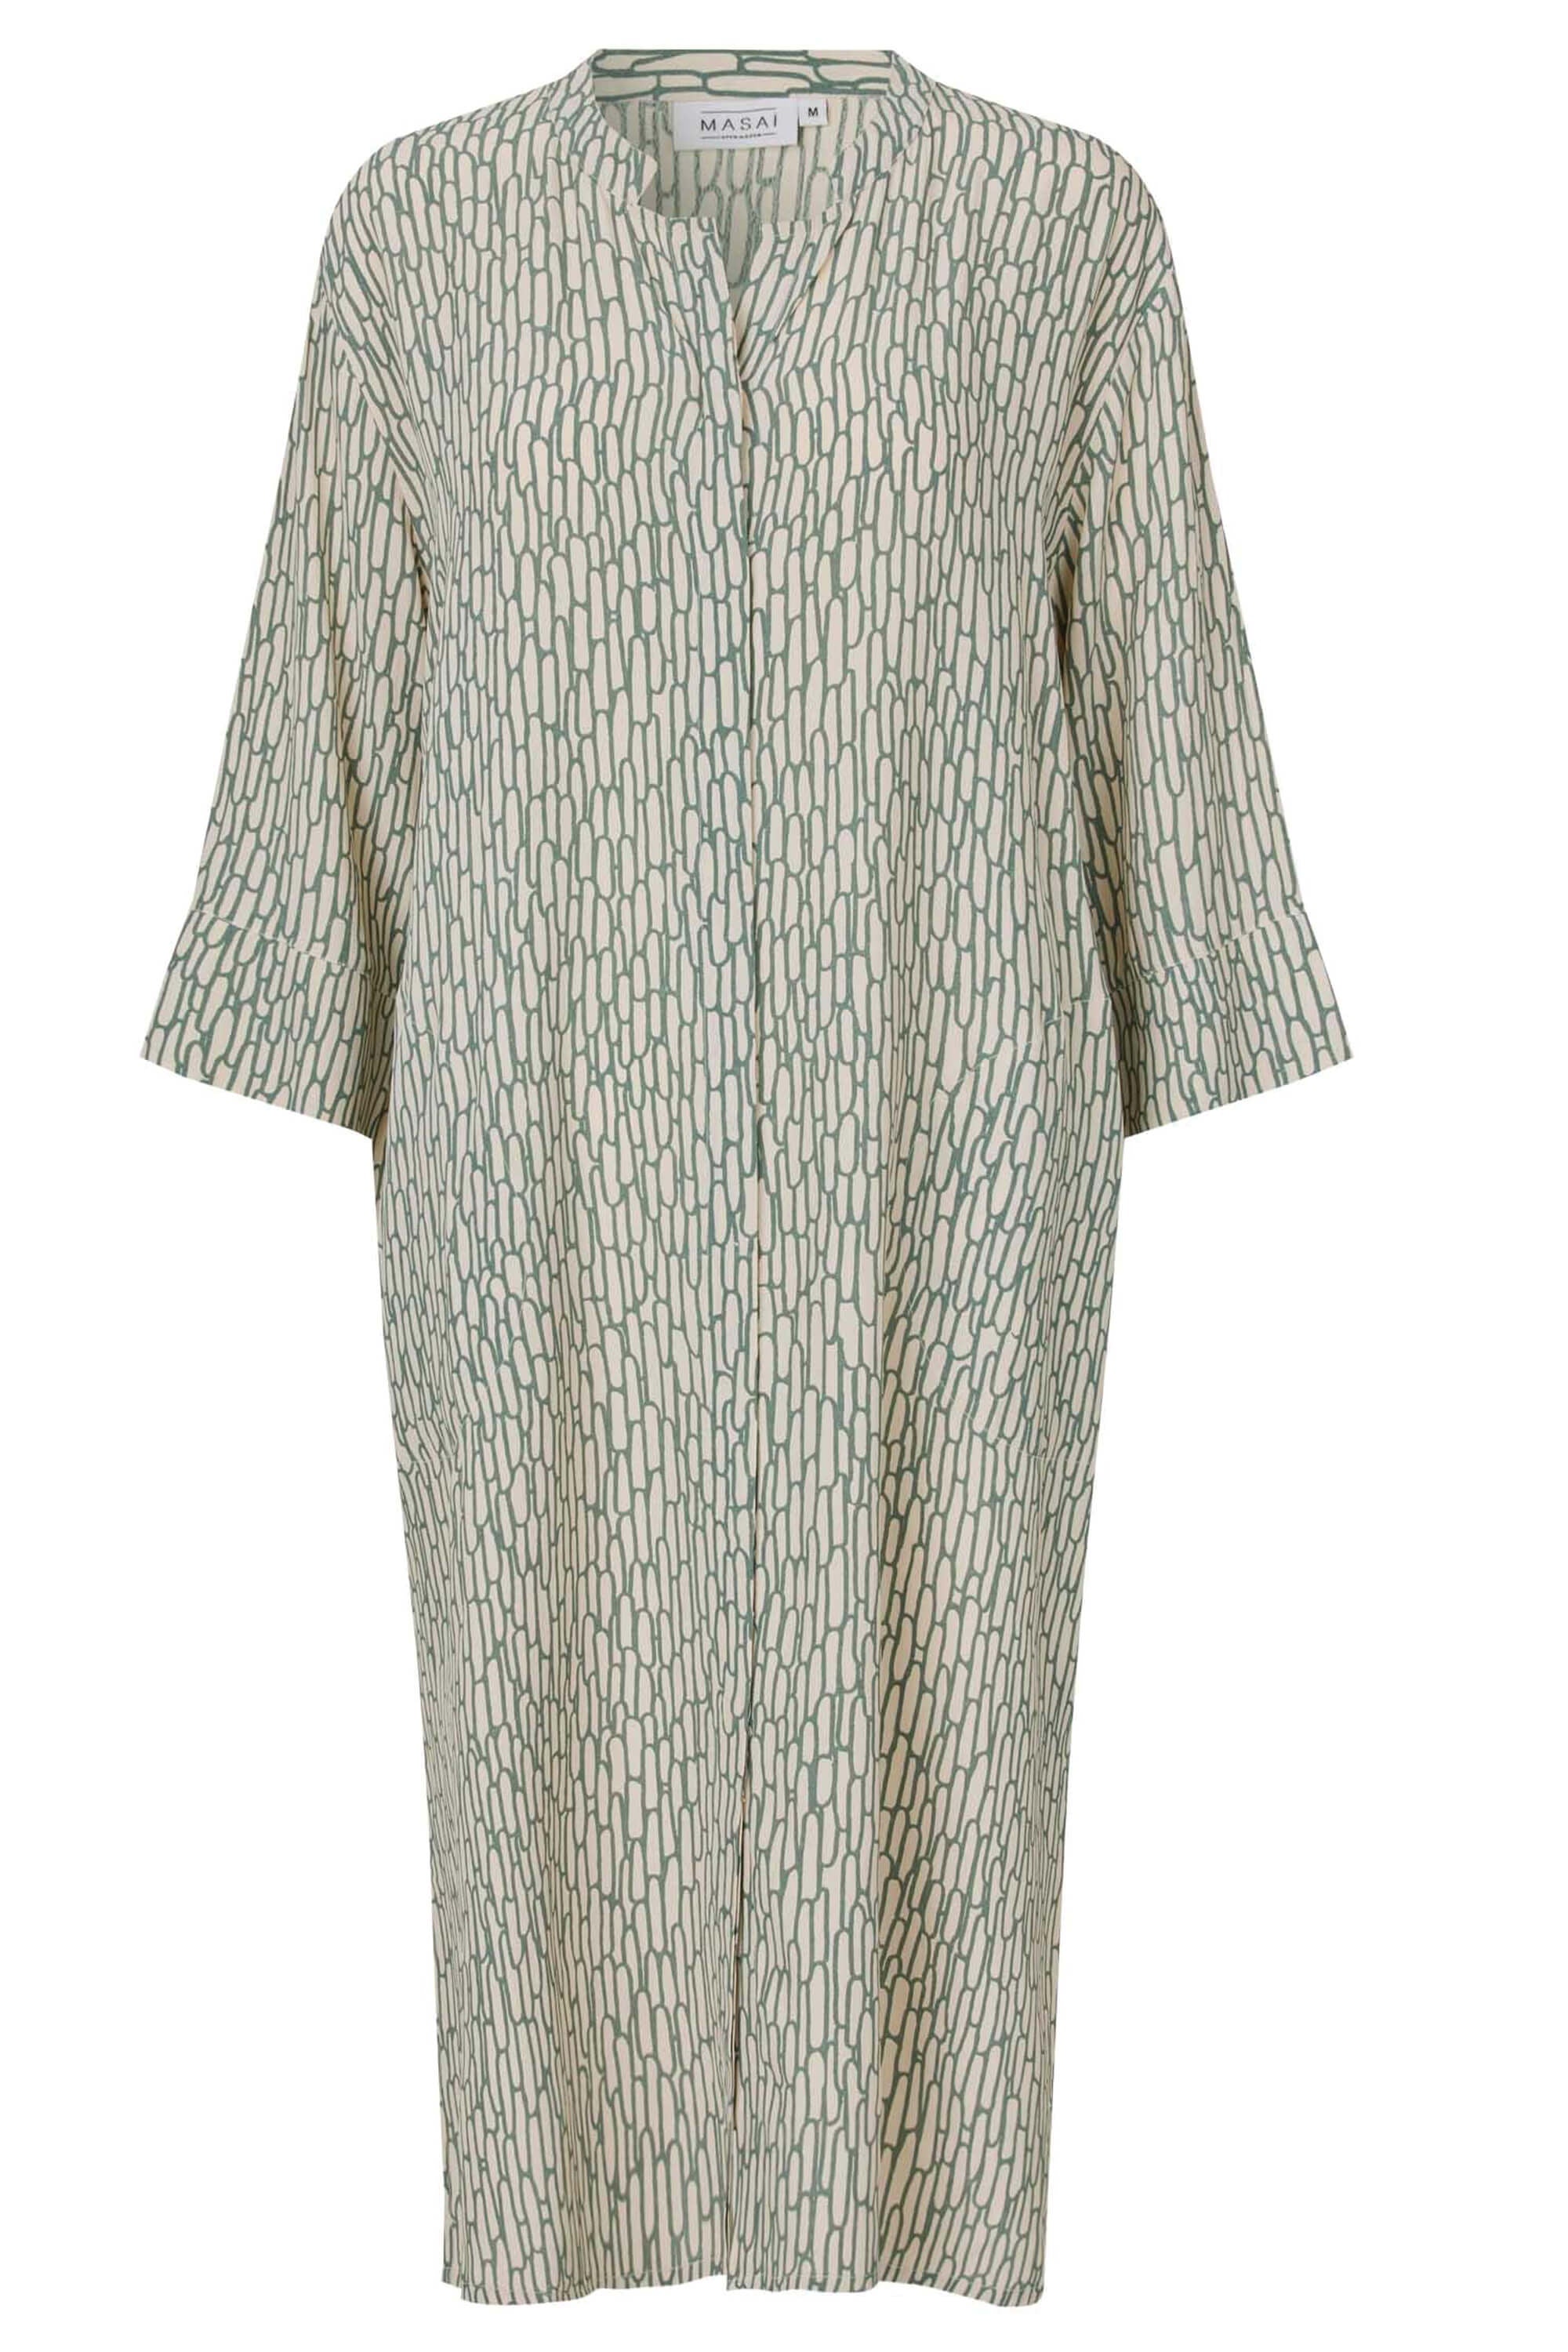 Masai Nimes 3/4 Sleeve Dress Balsam Green